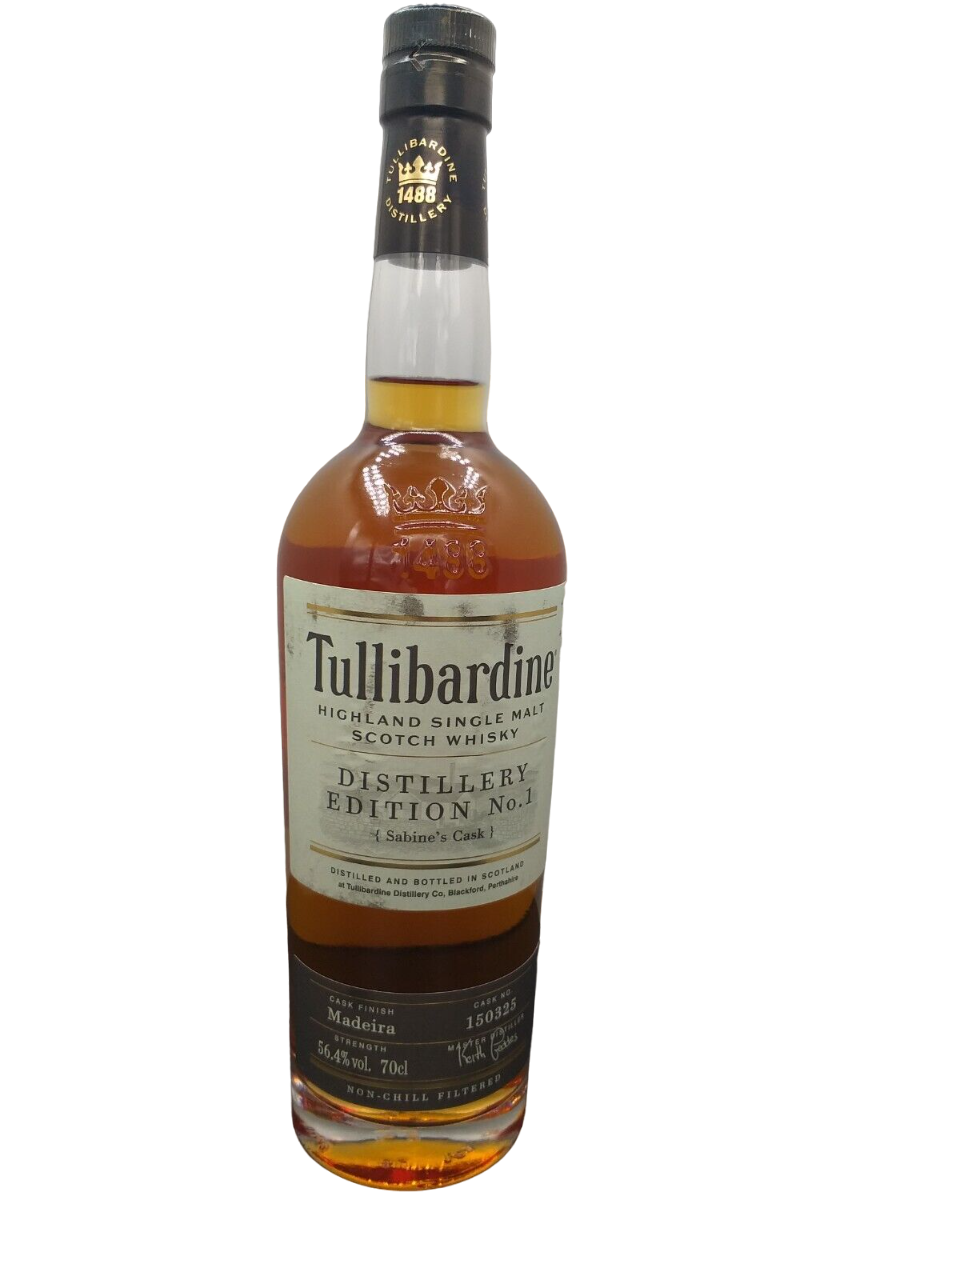 Tullibardine Distillery Edition No. 1 Sabine's Cask Finish Madeira Highland Single Malt Scotch Whisky Scotland 56,4% VOL. (1x0,7ltr.)